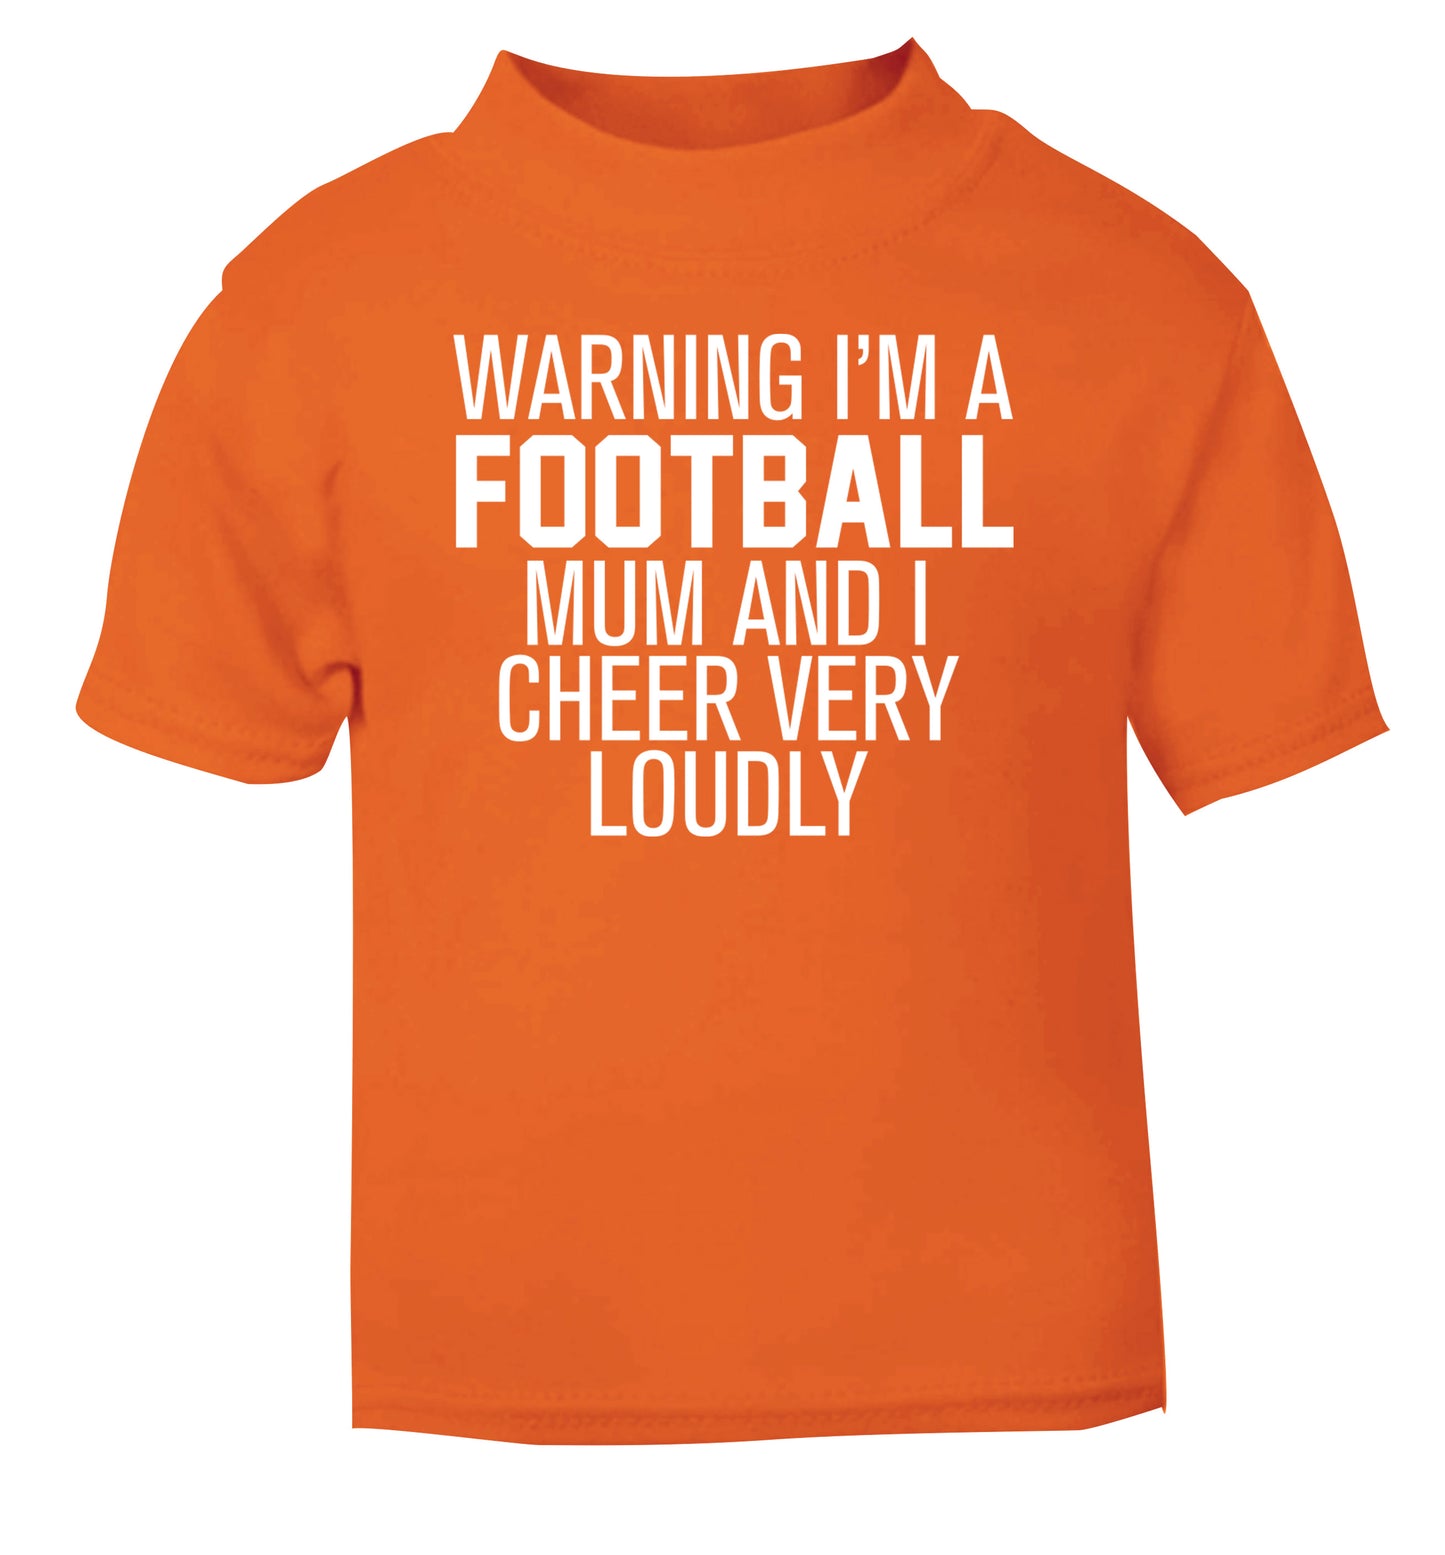 Warning I'm a football mum and I cheer very loudly orange Baby Toddler Tshirt 2 Years